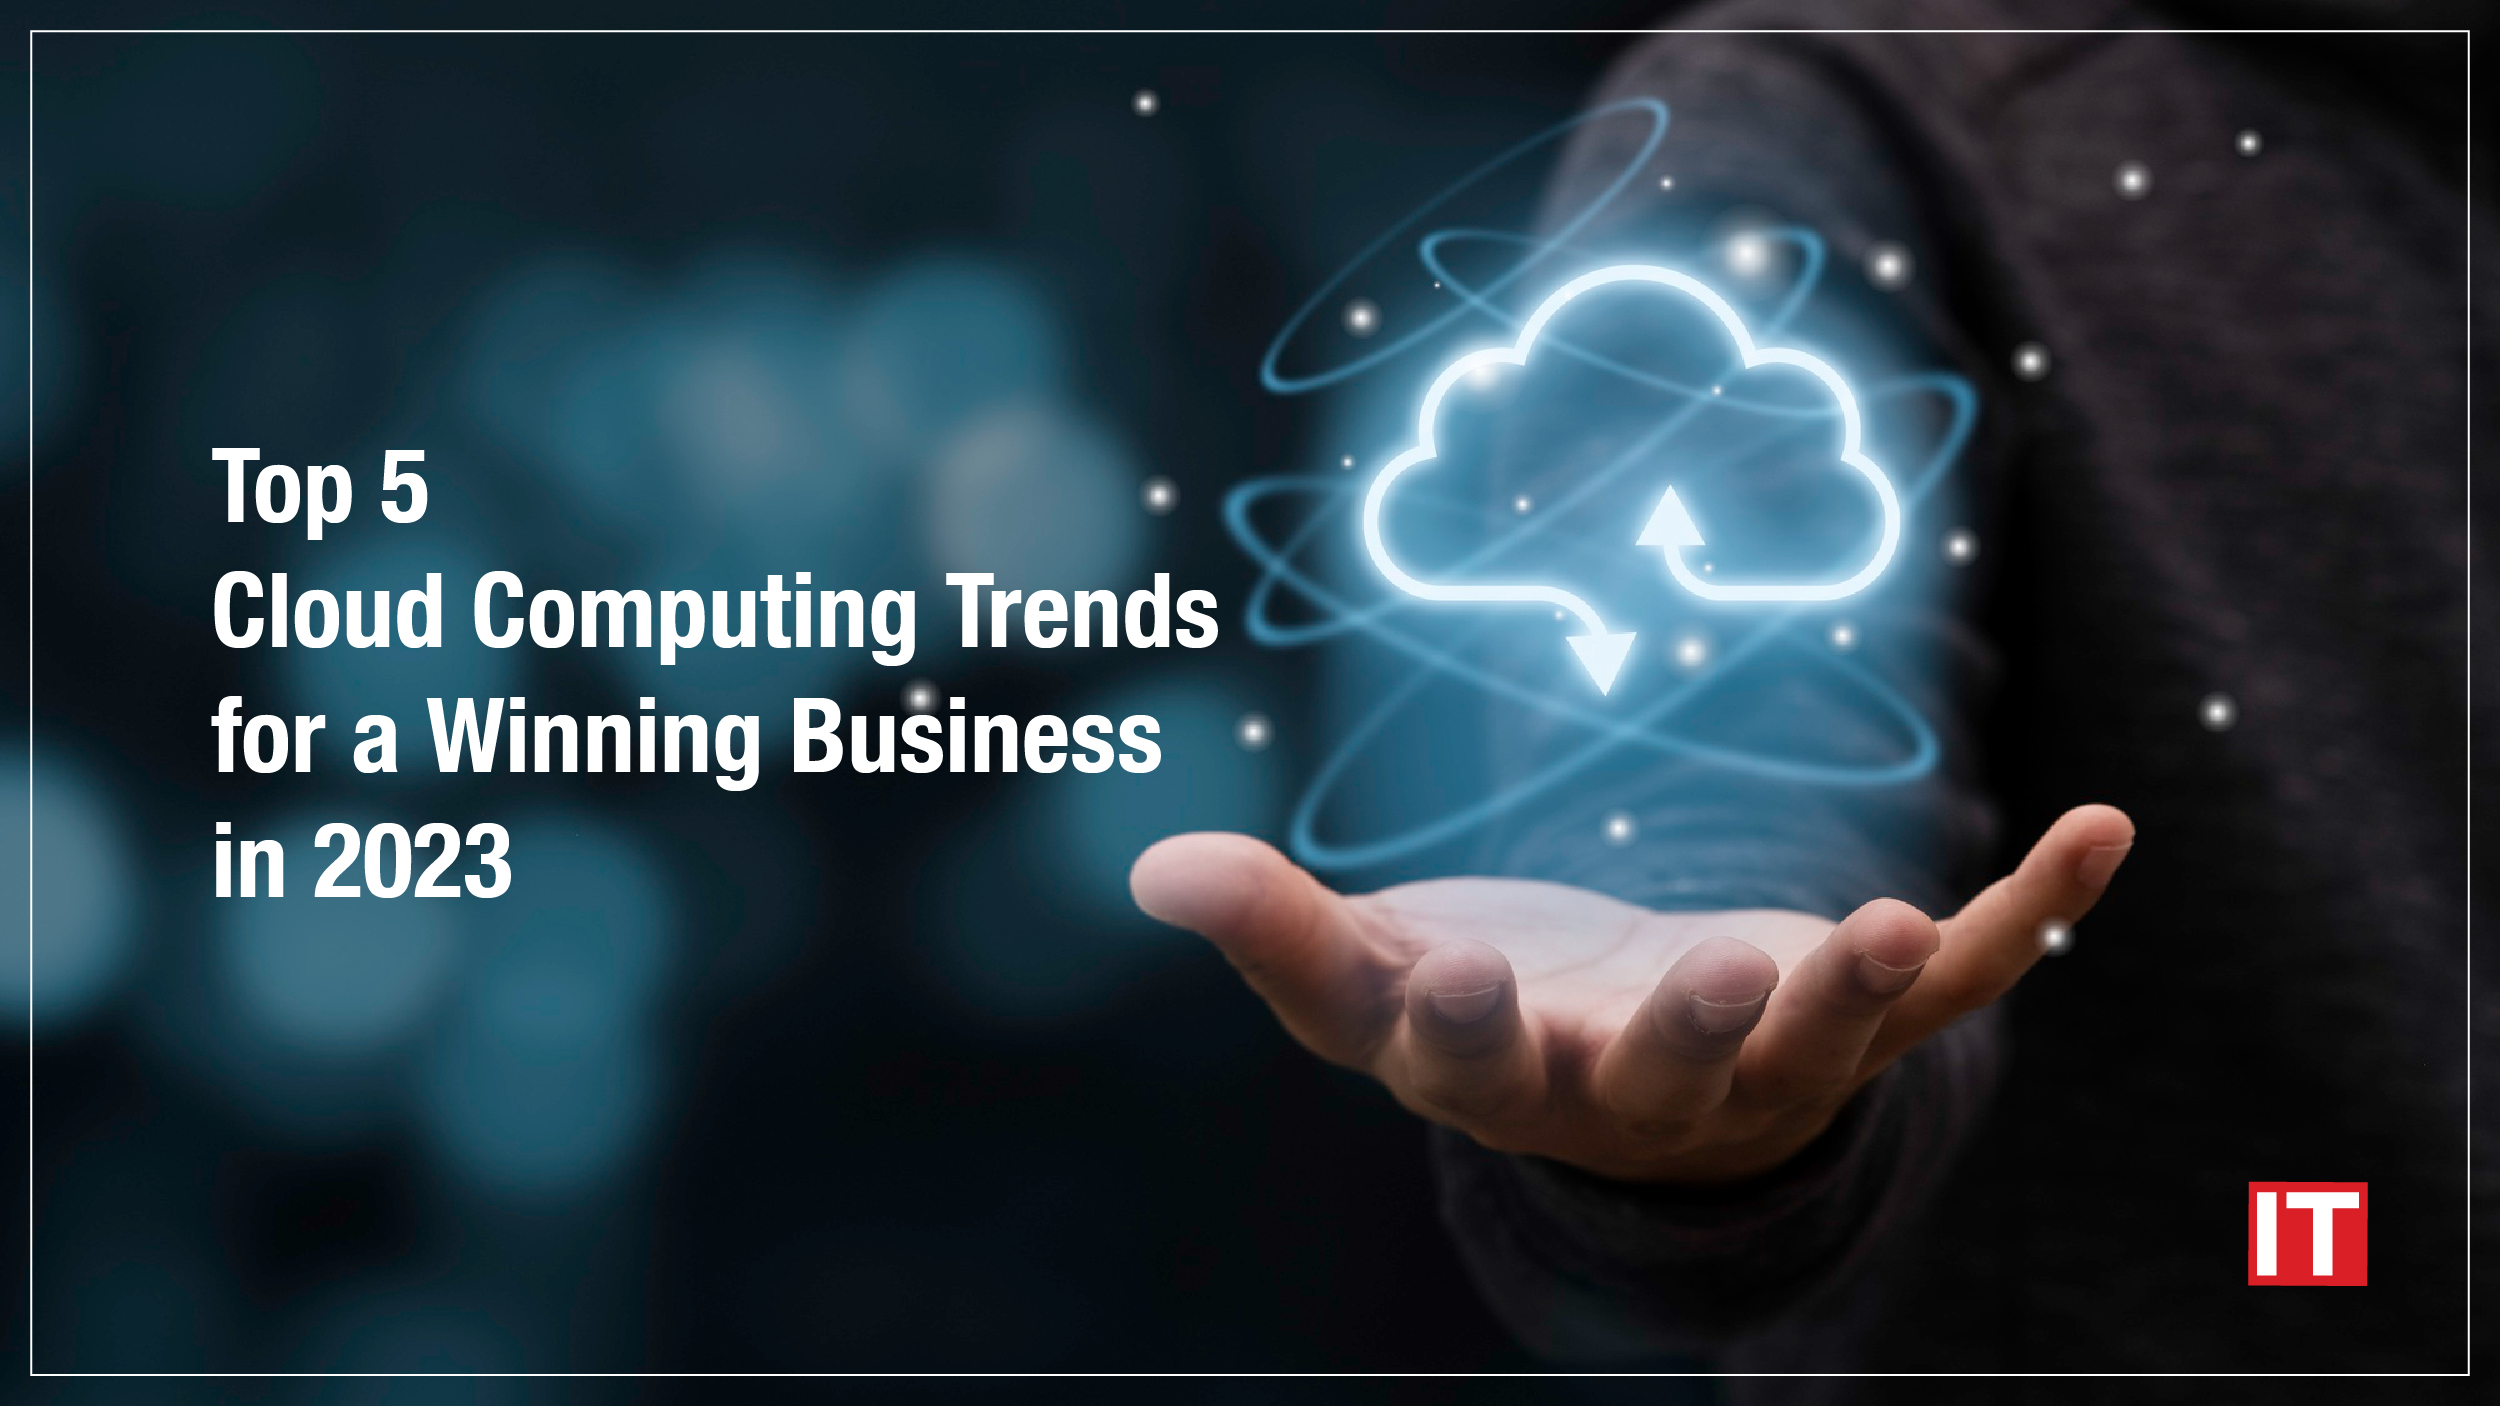 Cloud Computing trends